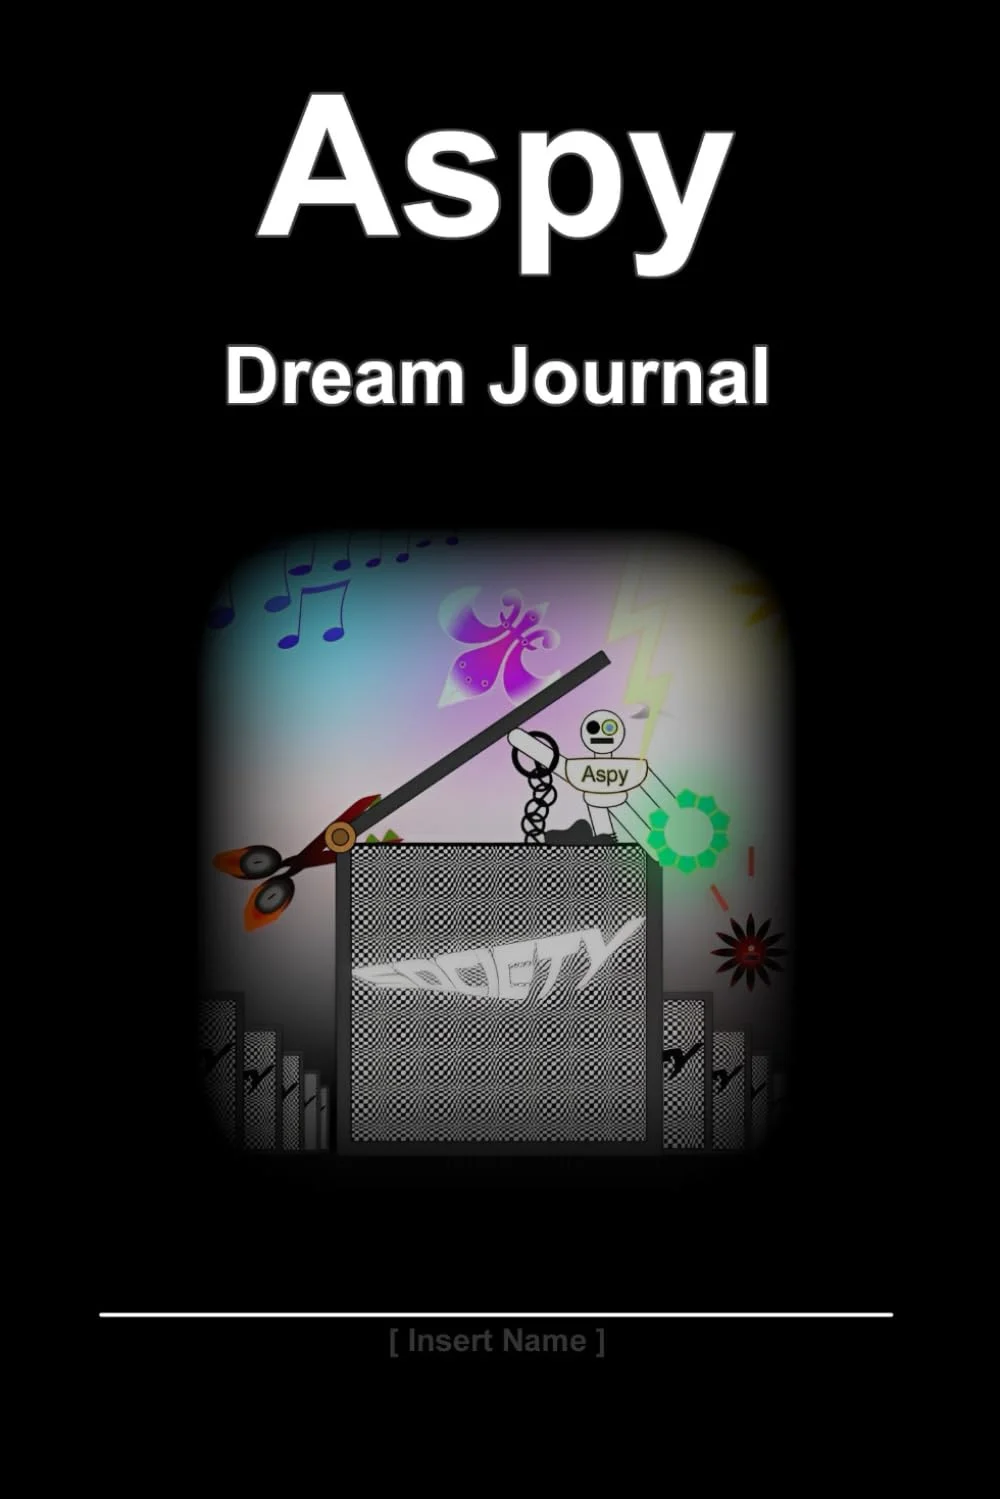 Aspy Dream Journal